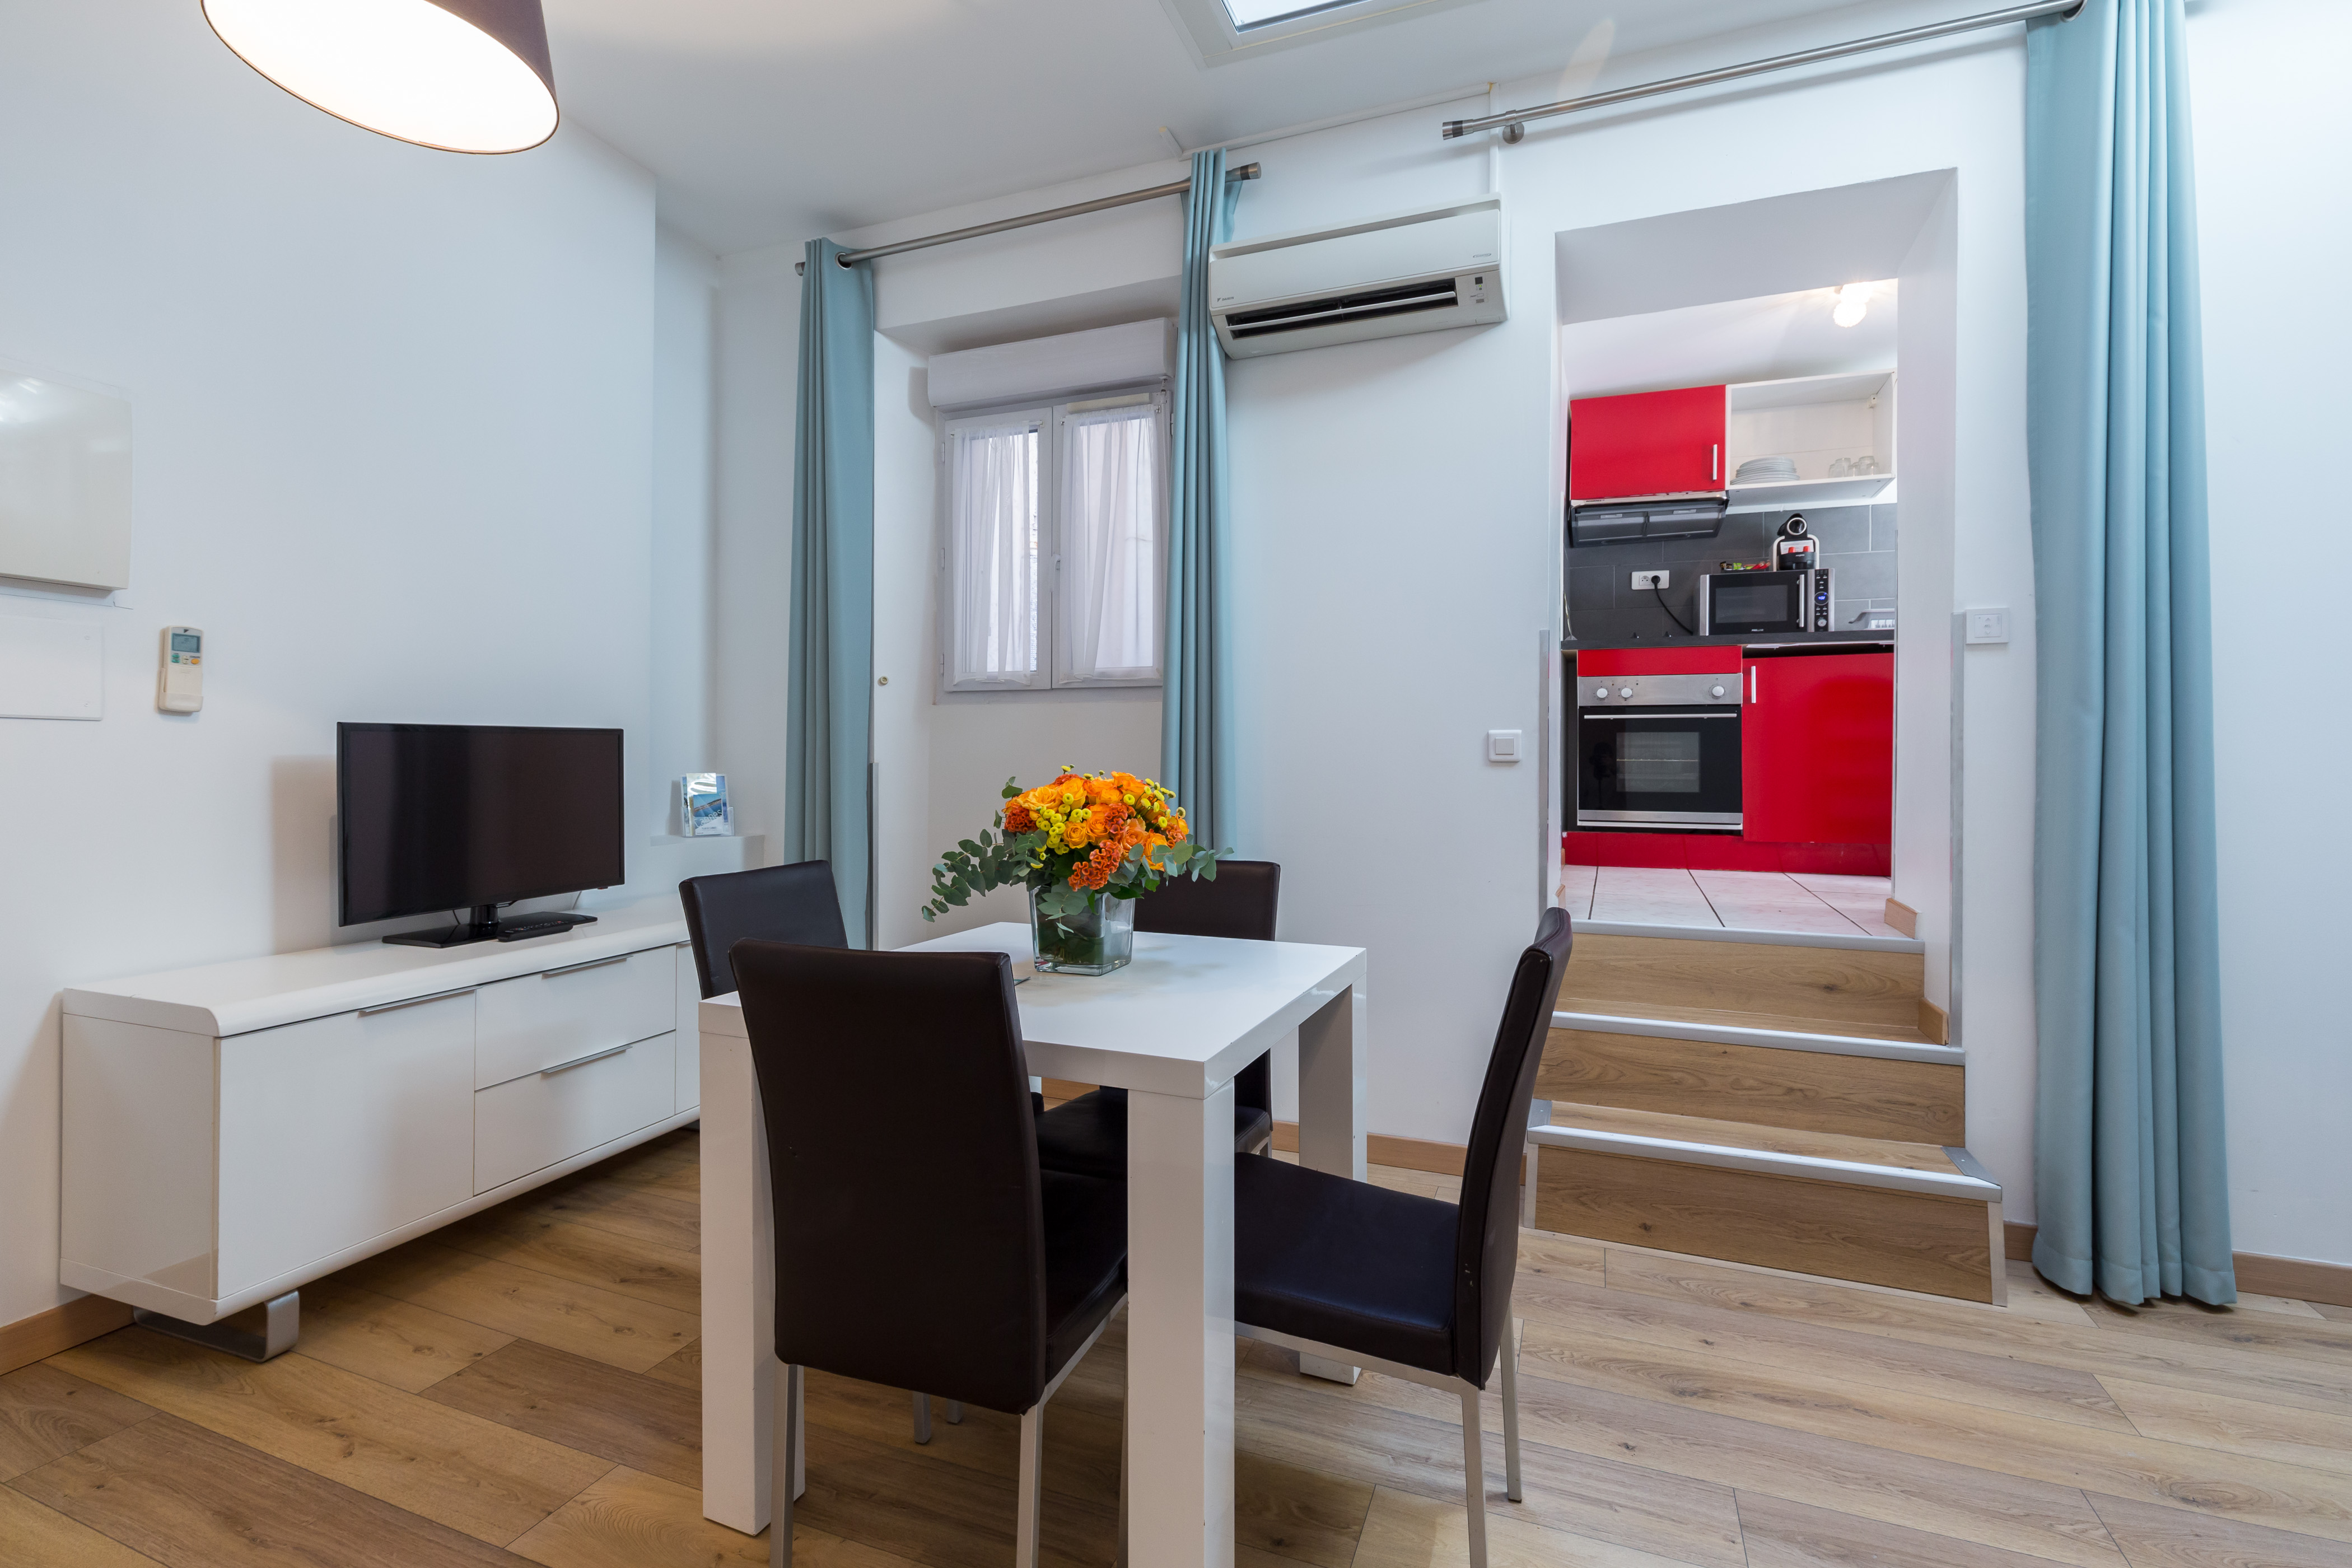 2 pièces supérieur 35 m² - superior 1 bedroom apartment 35 sqmIMG-0670.jpg